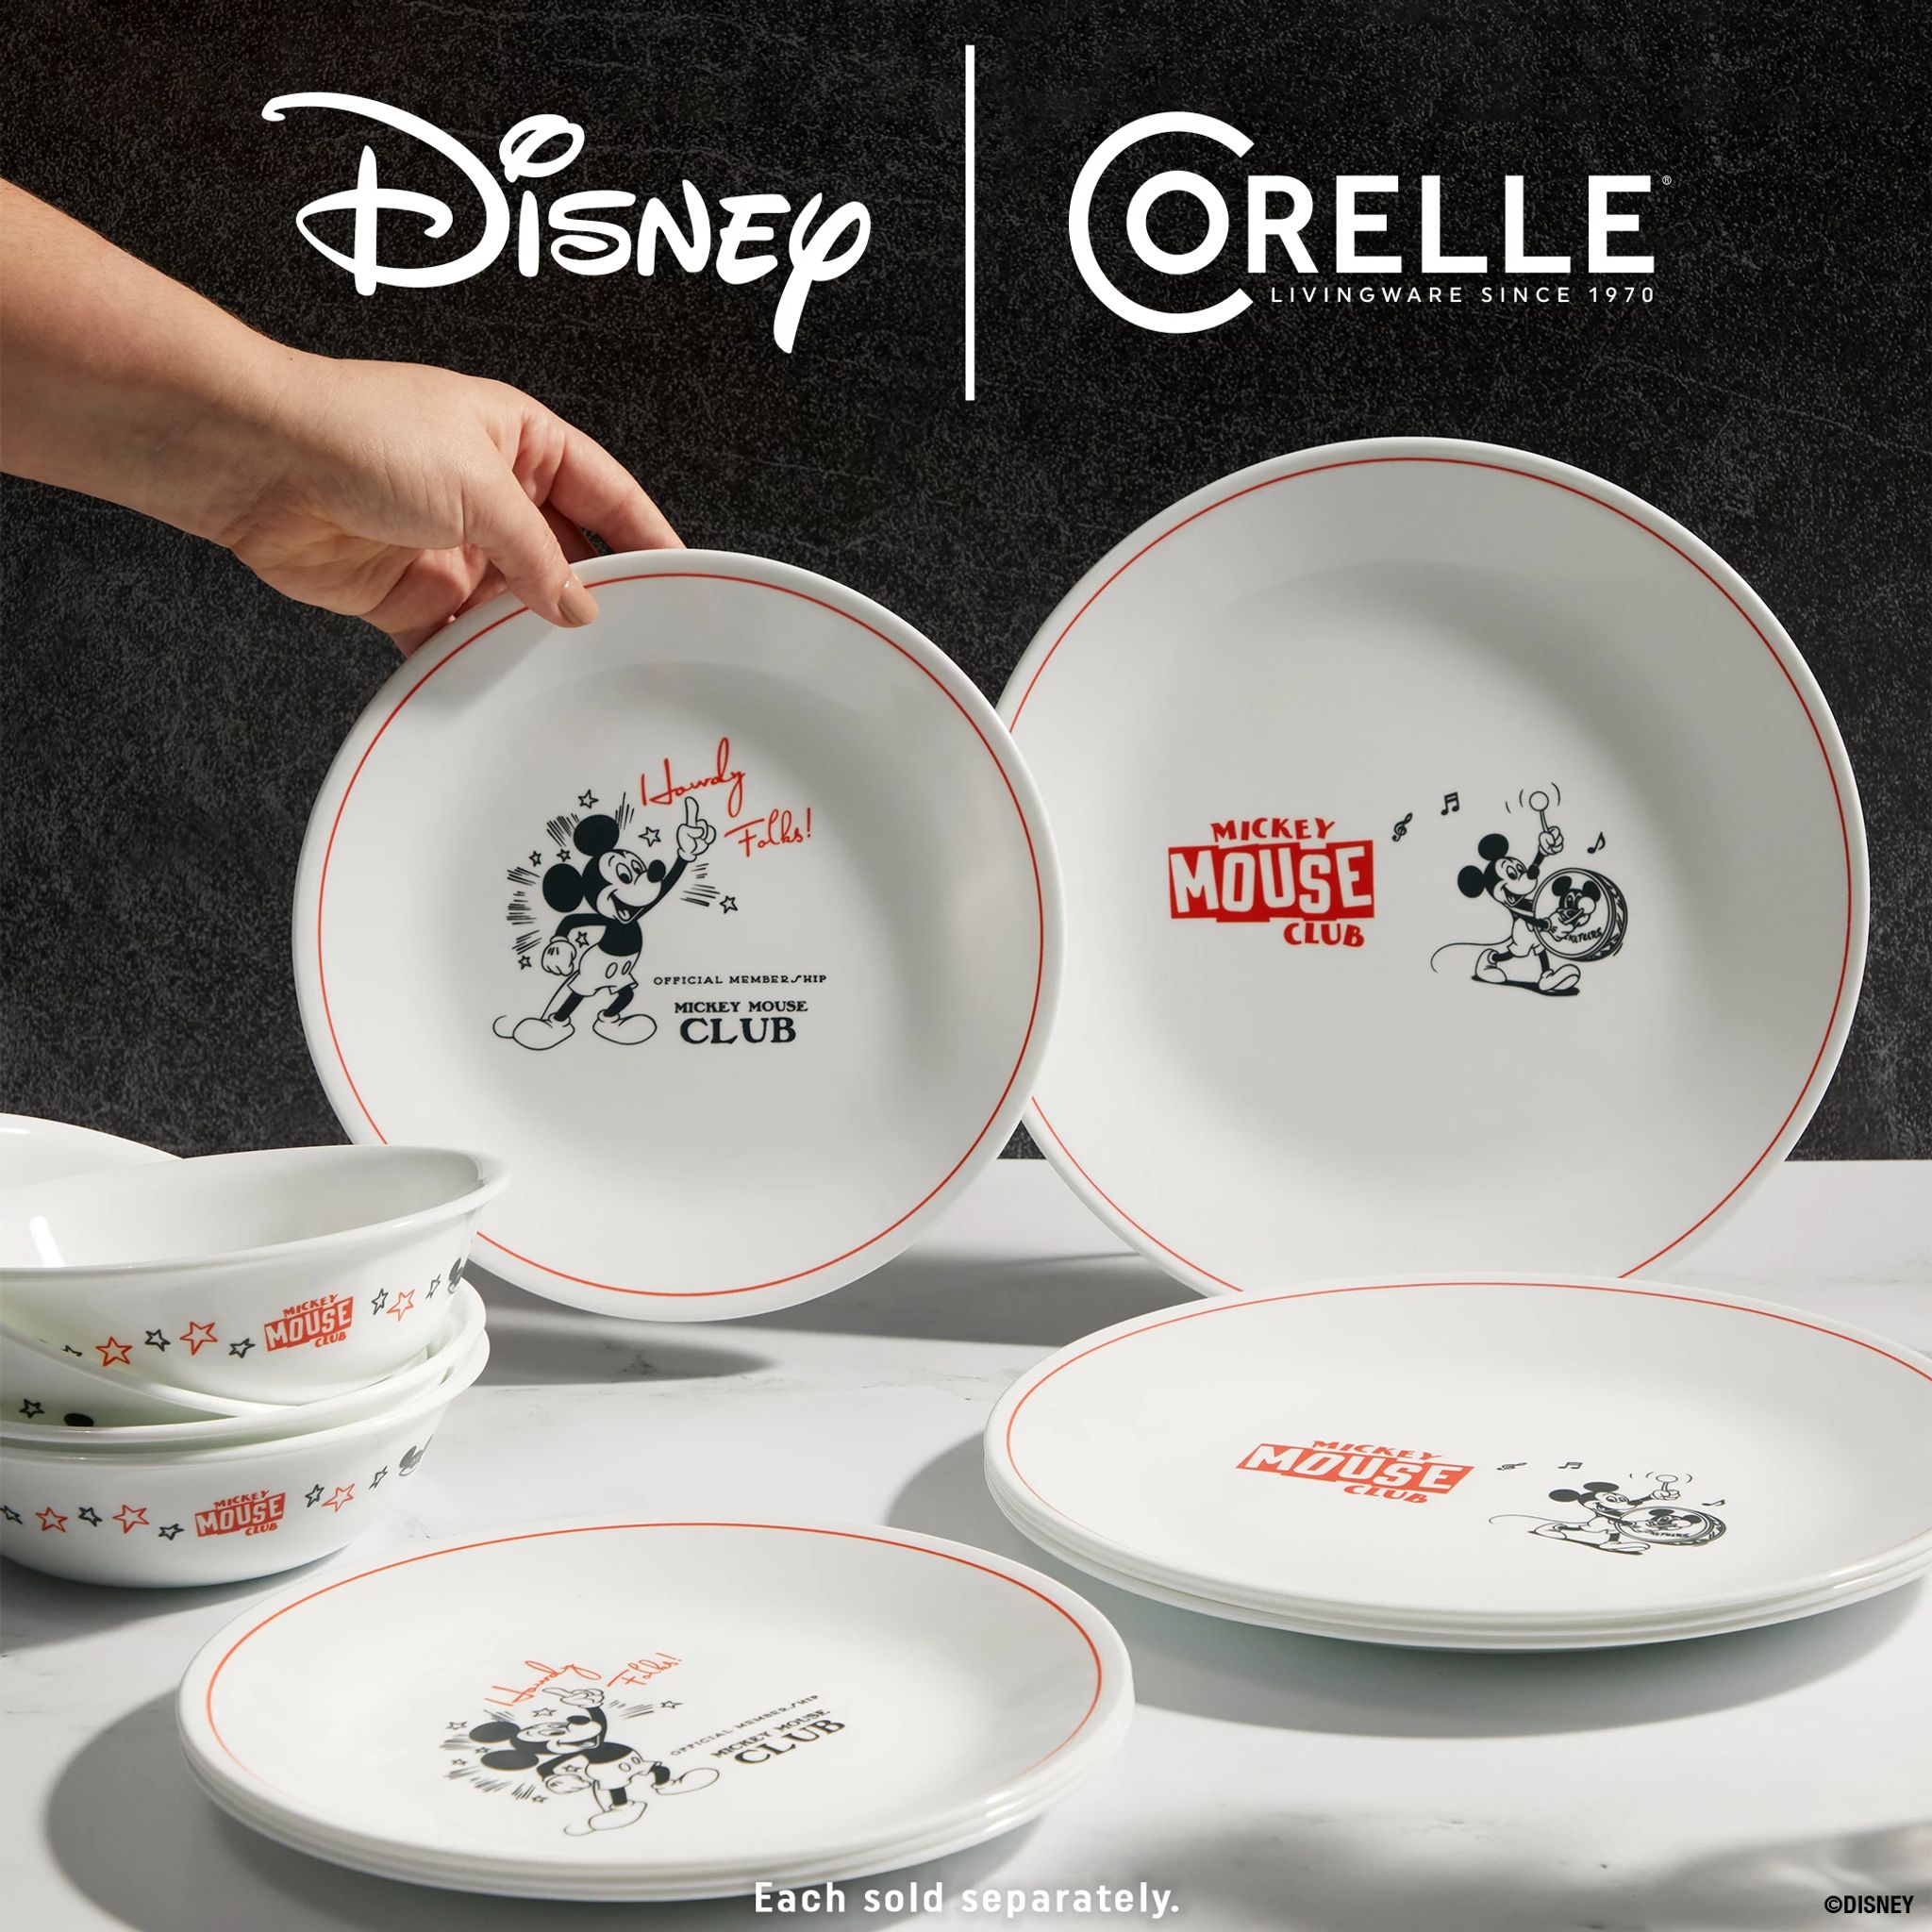 Disney Villains Themed 16 Piece Ceramic Dinnerware Set